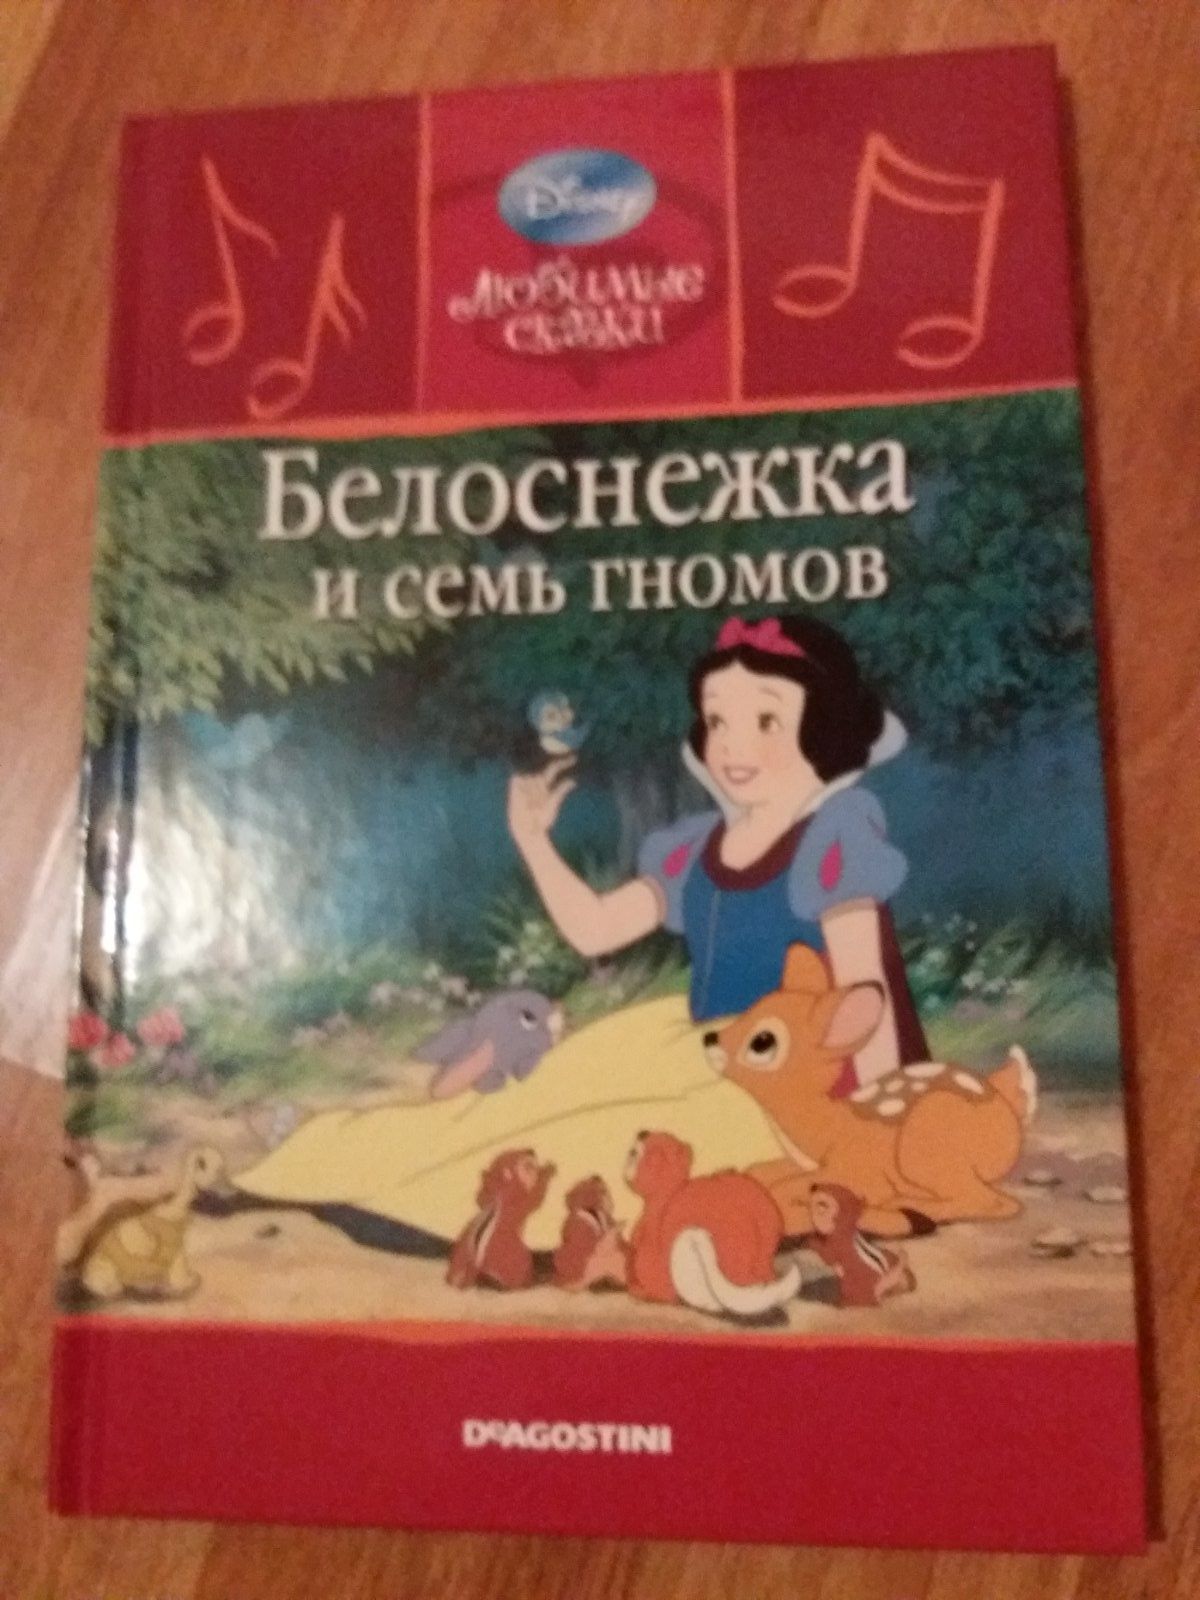 Дитяча книга "Кіт у чоботях"